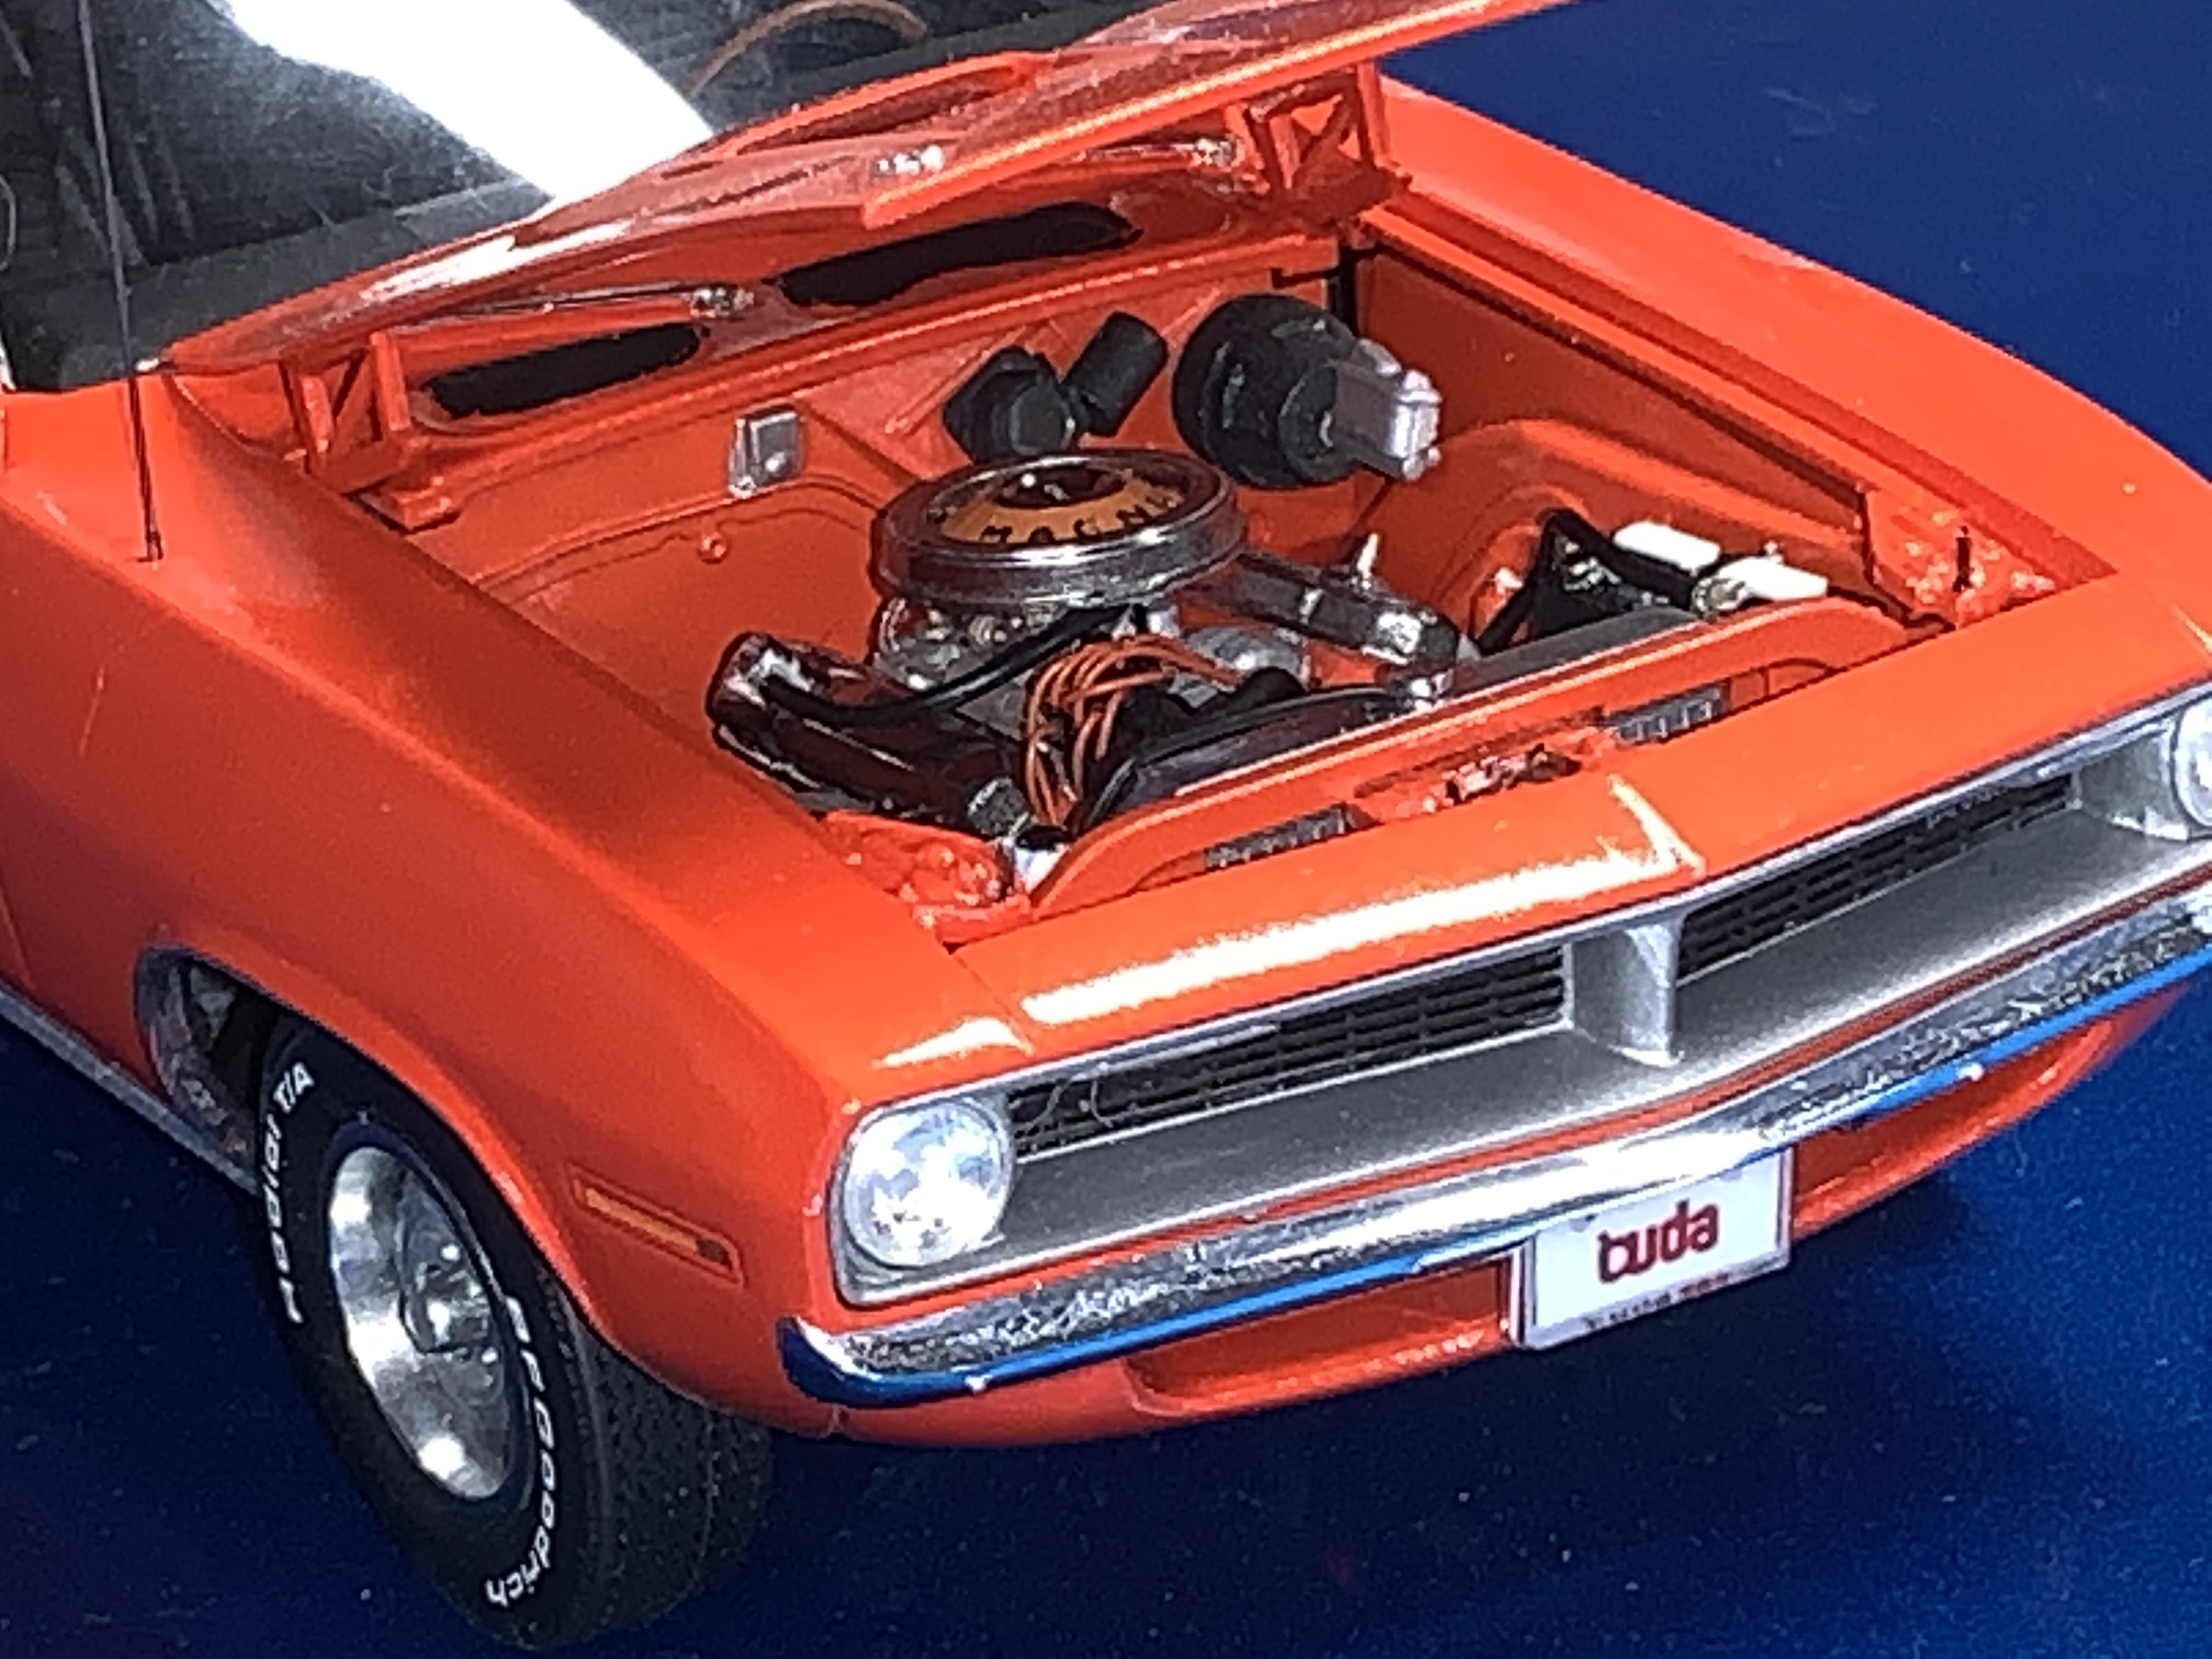 '70 383 Cuda - Model Cars - Model Cars Magazine Forum